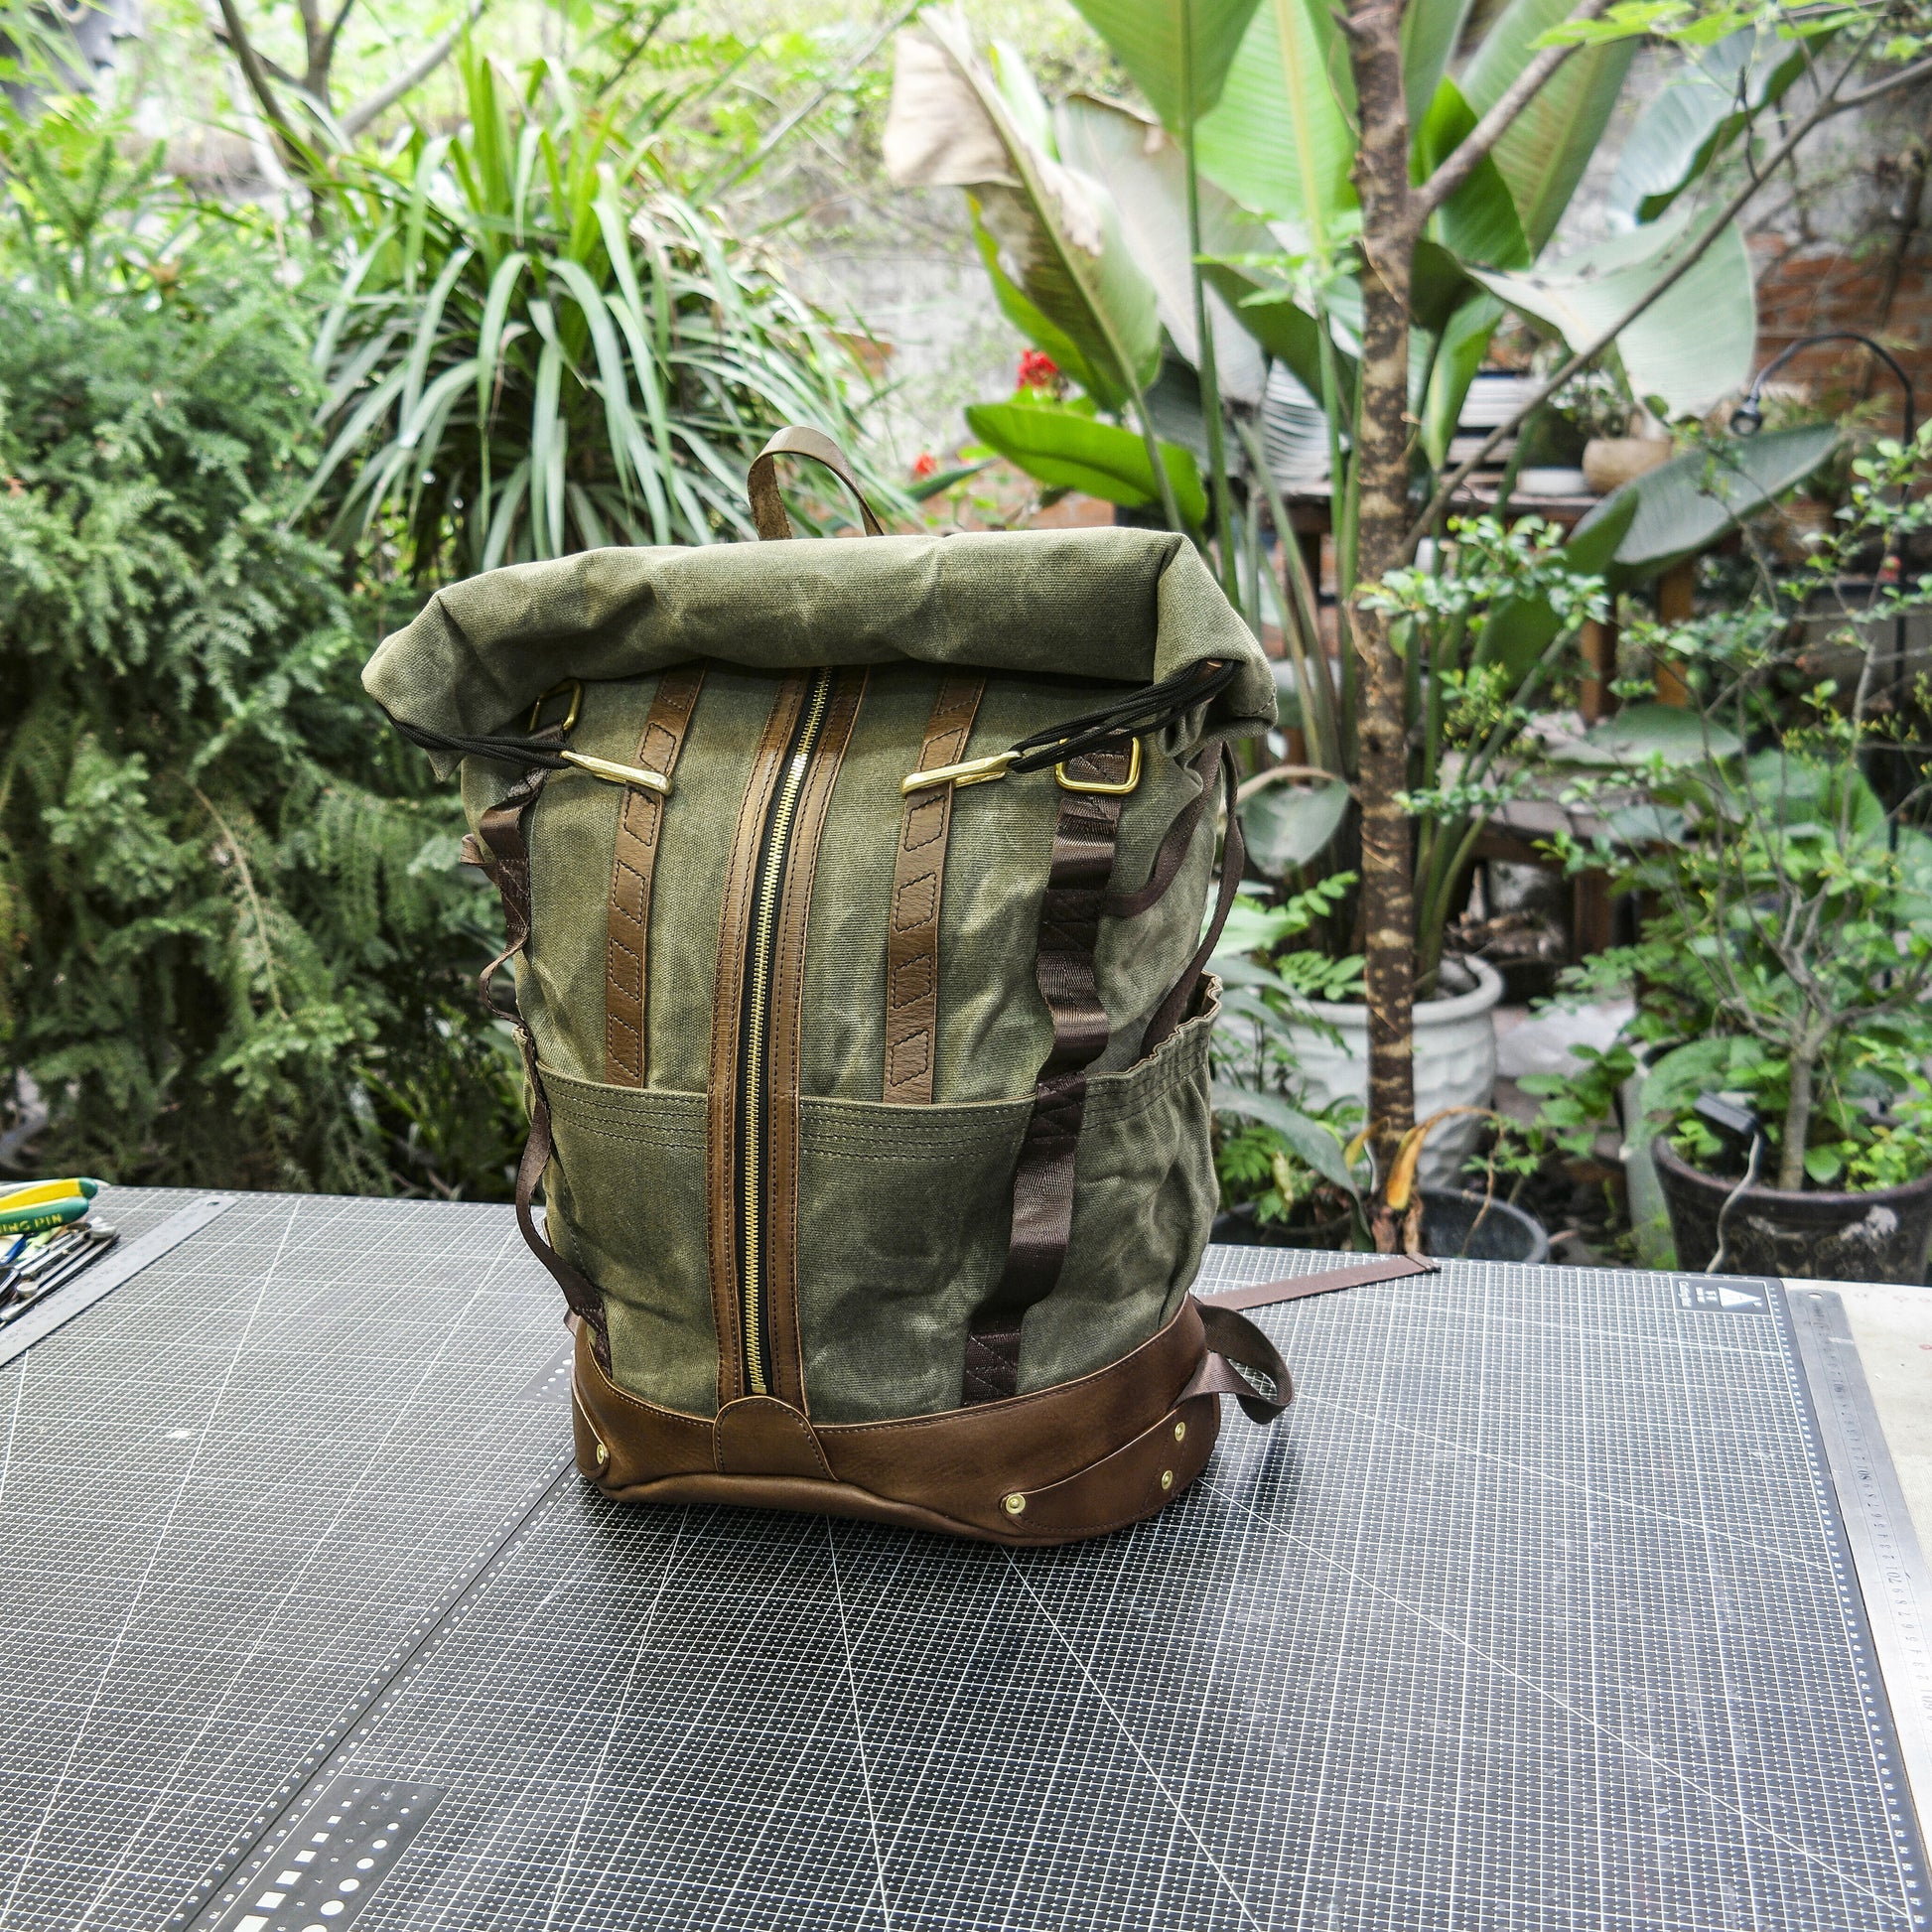 Canvas Backpacks &amp; Rucksacks - Vintage Backpacks&nbsp;| Leather Backpack | Waxed Canvas Backpack | Bushcraft Backpack | Travel, Camping, Hiking | Riding backpack, motorcycle backpack